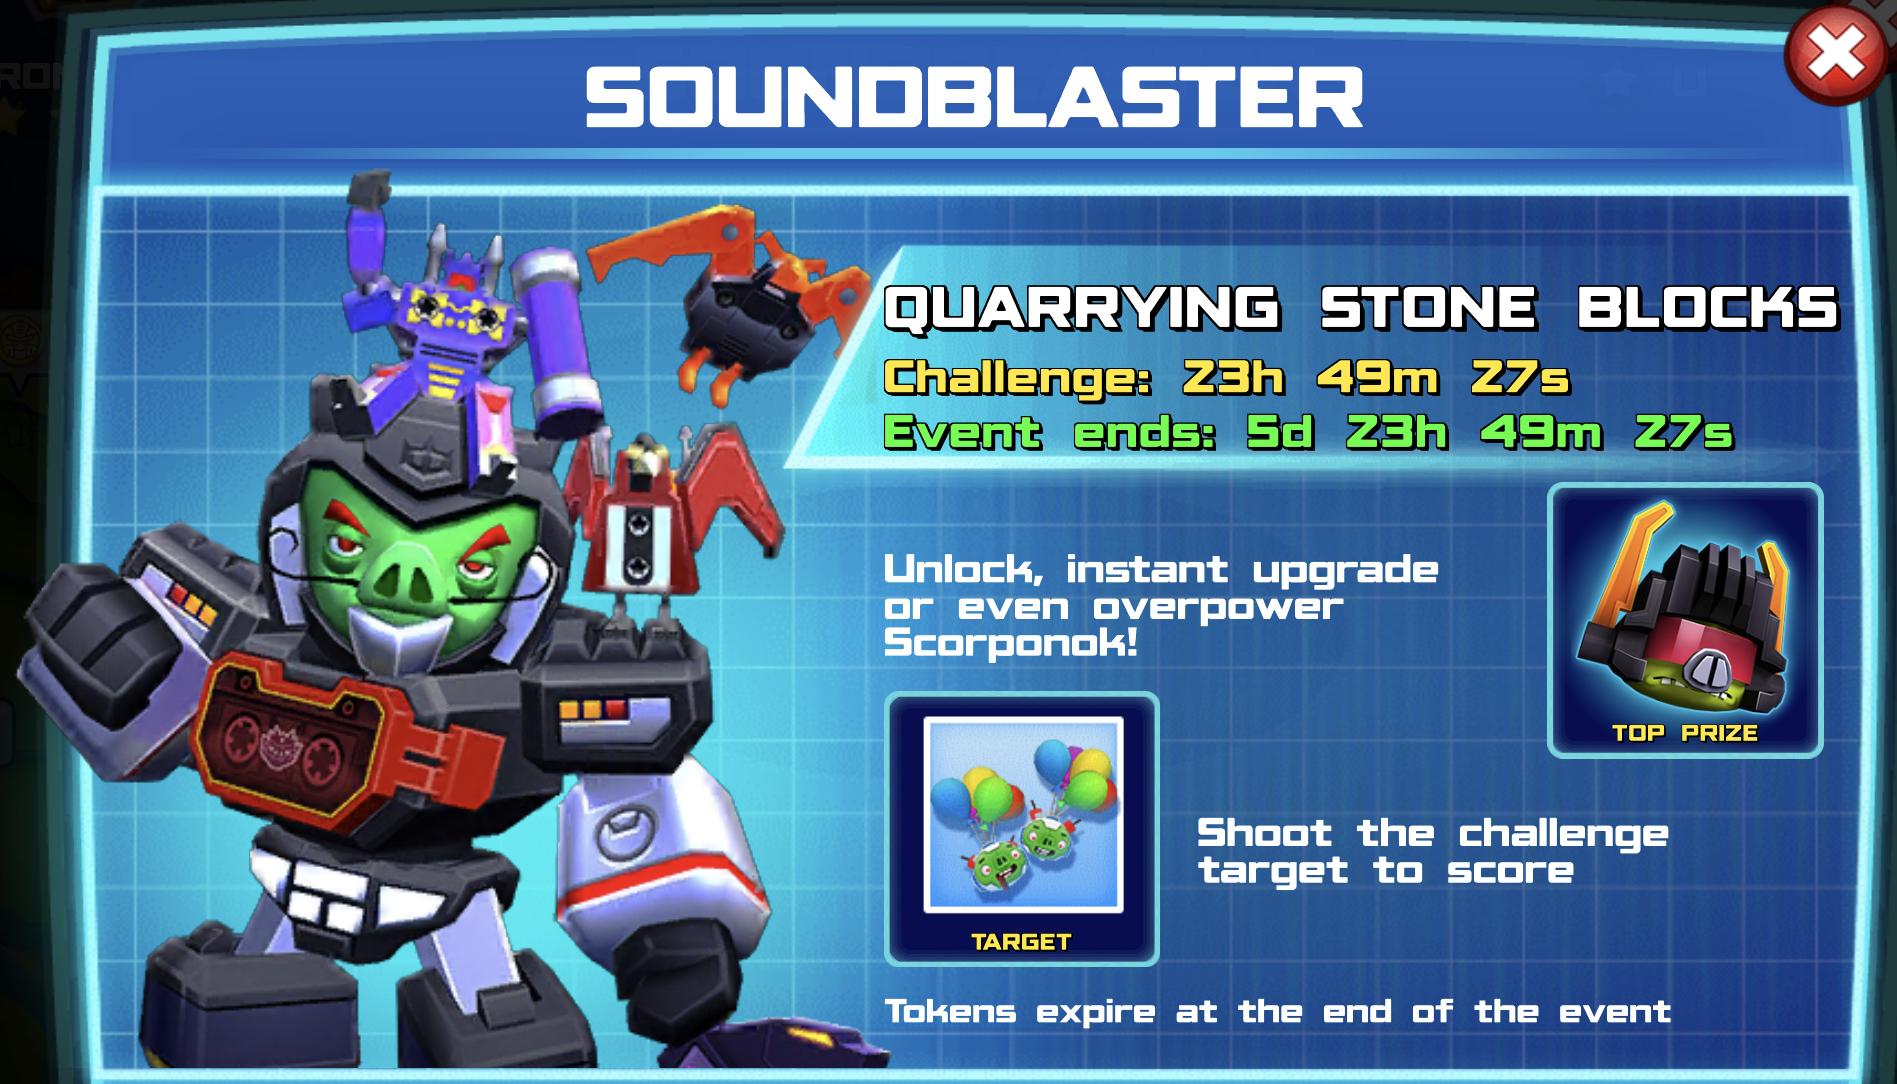 The event banner for Soundblaster